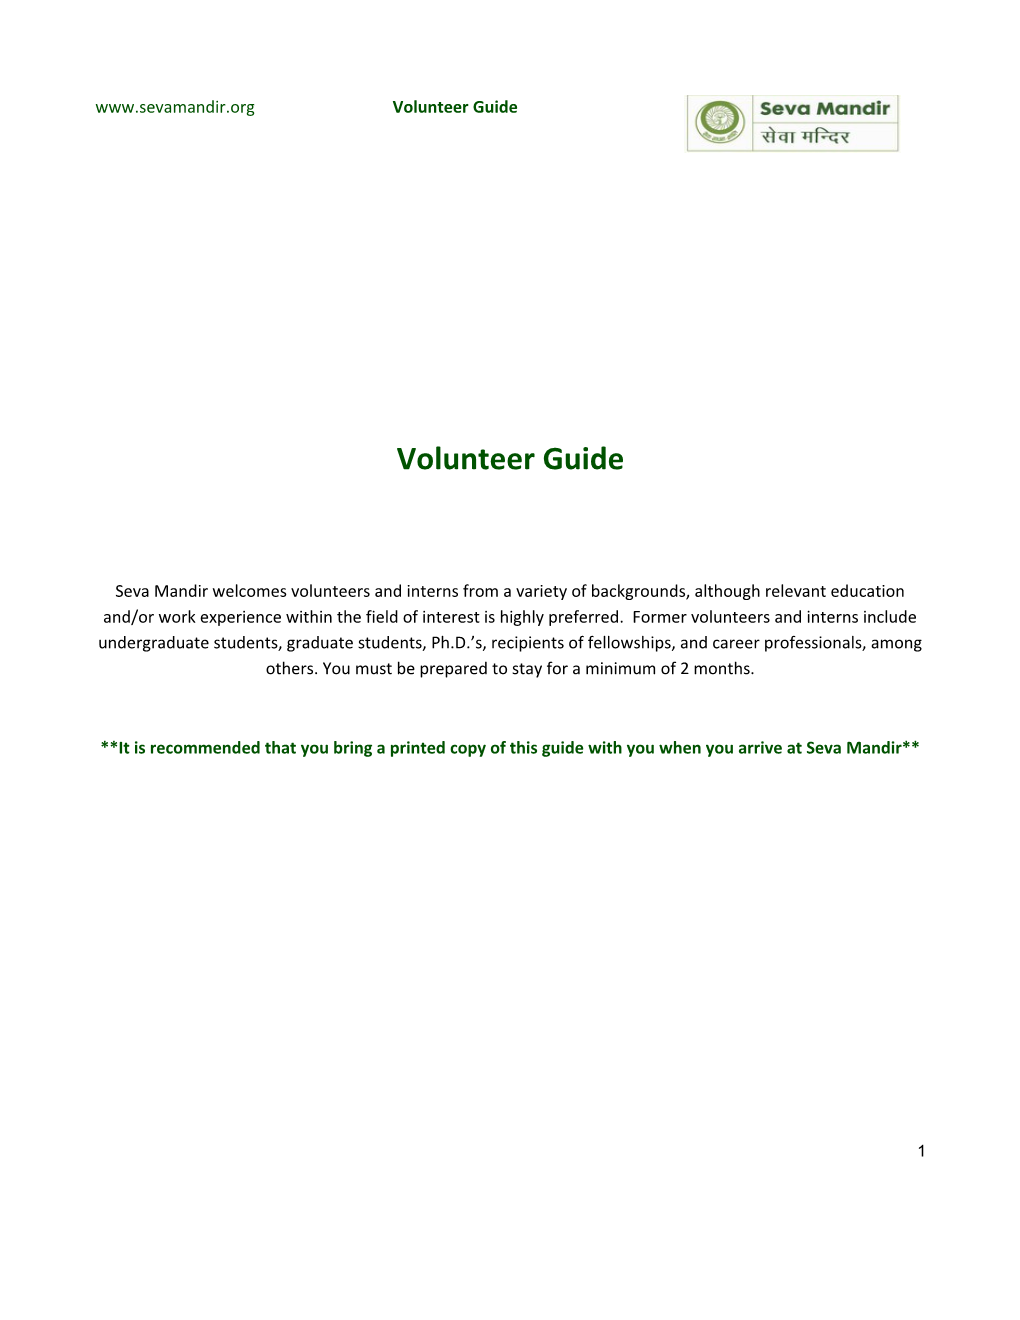 Seva Mandir; a Guide for Volunteers